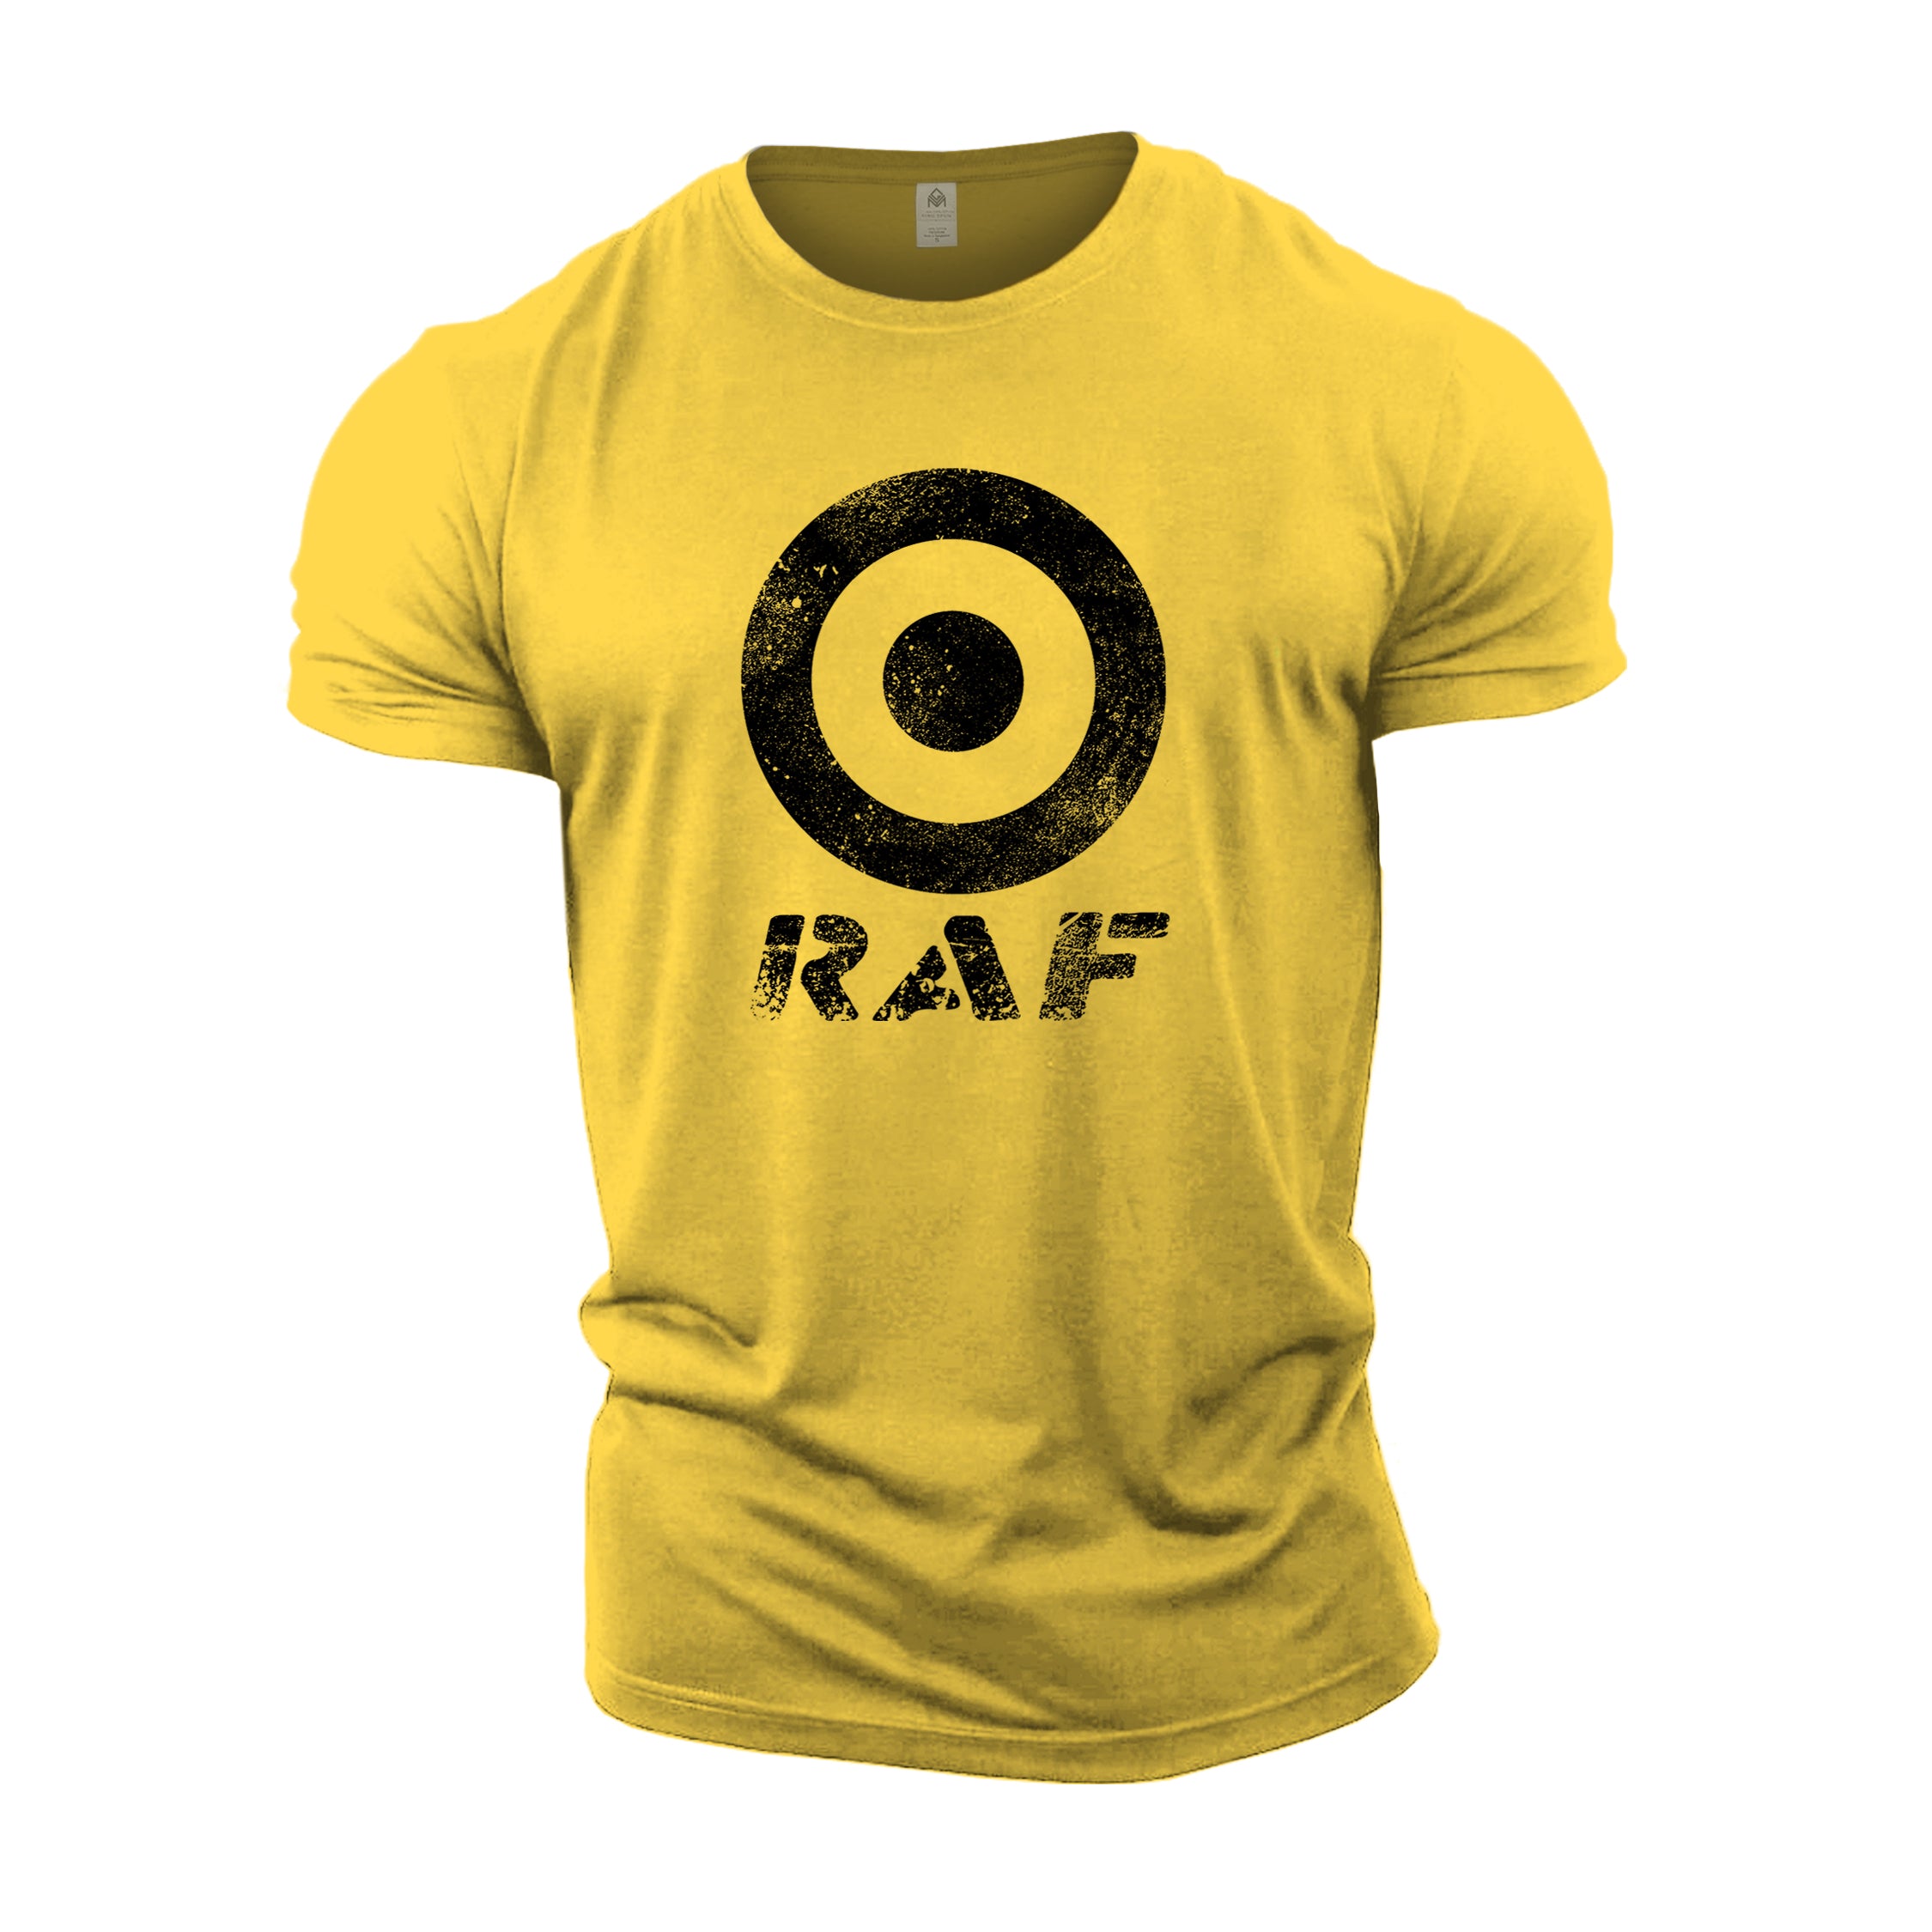 Royal Air Force RAF Chest - Gym T-Shirt